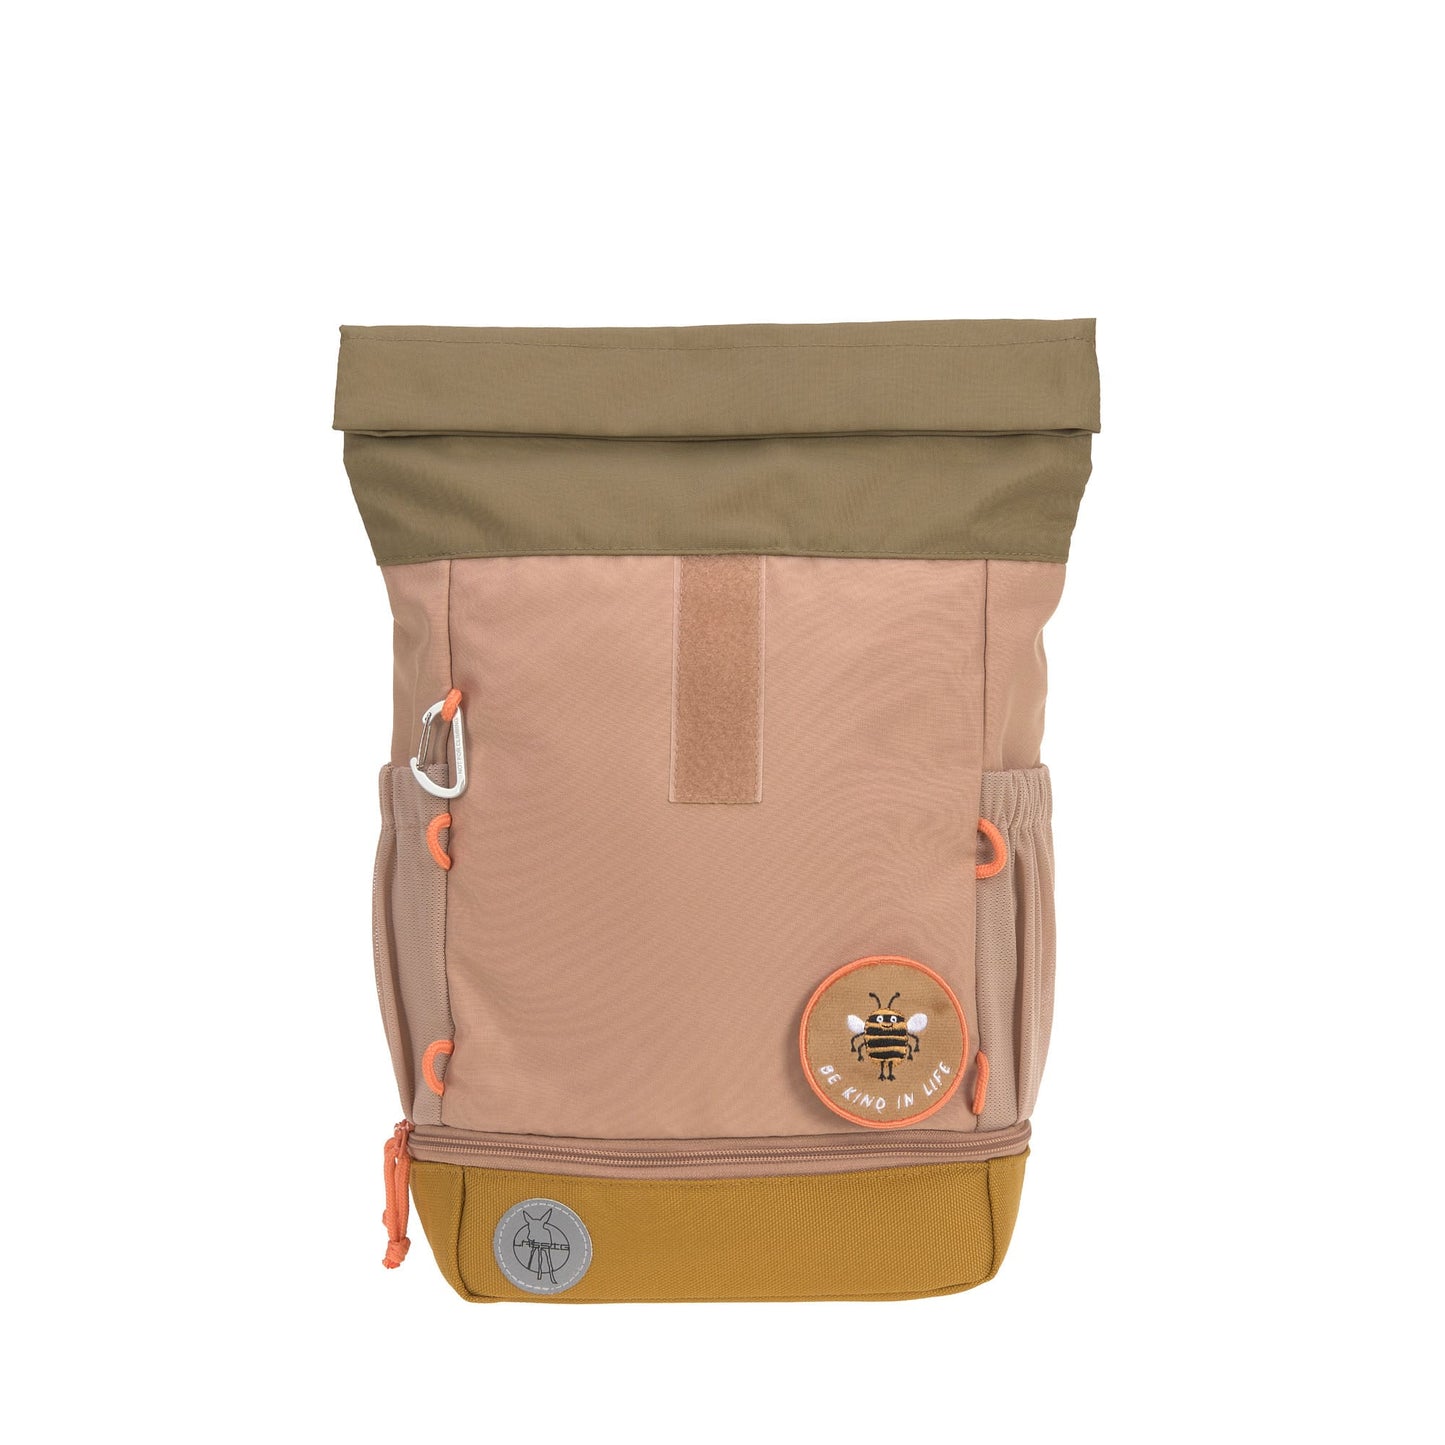 Mini Rolltop Backpack nature braun